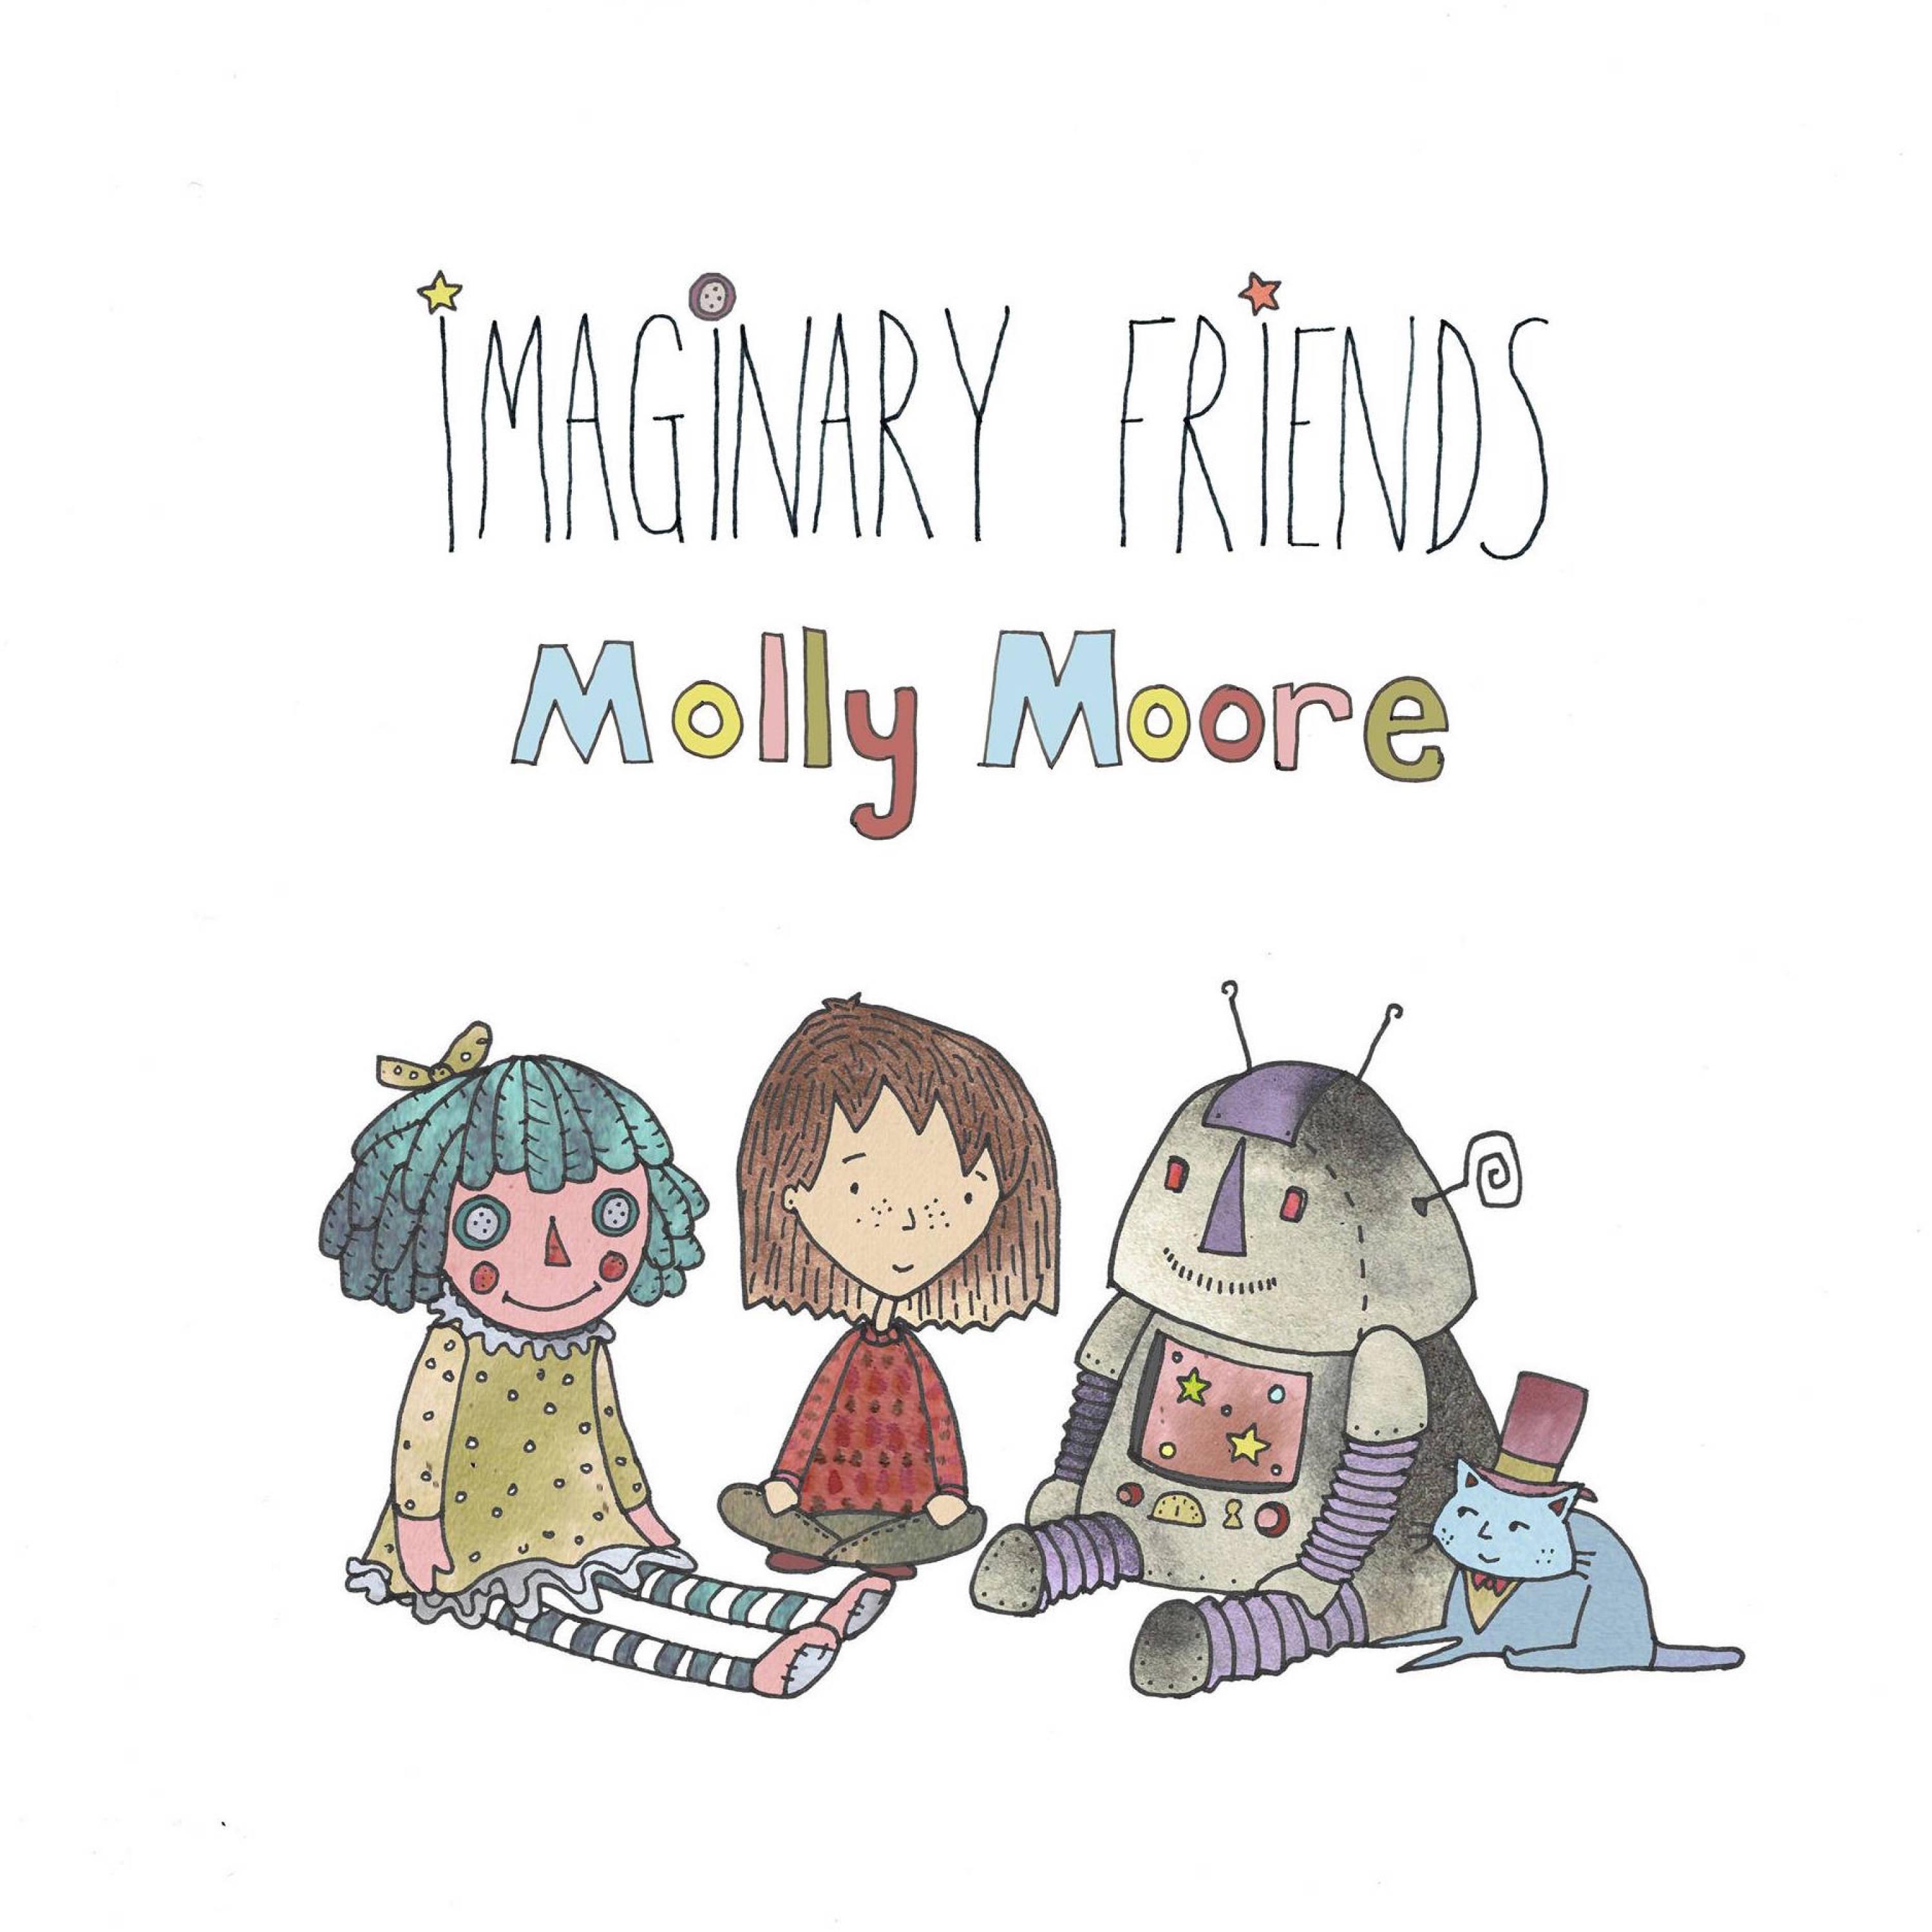 S imaginary friend. Molly Moore. Molly френдс. Imaginary friend. Molly Moore handsomer обложка.